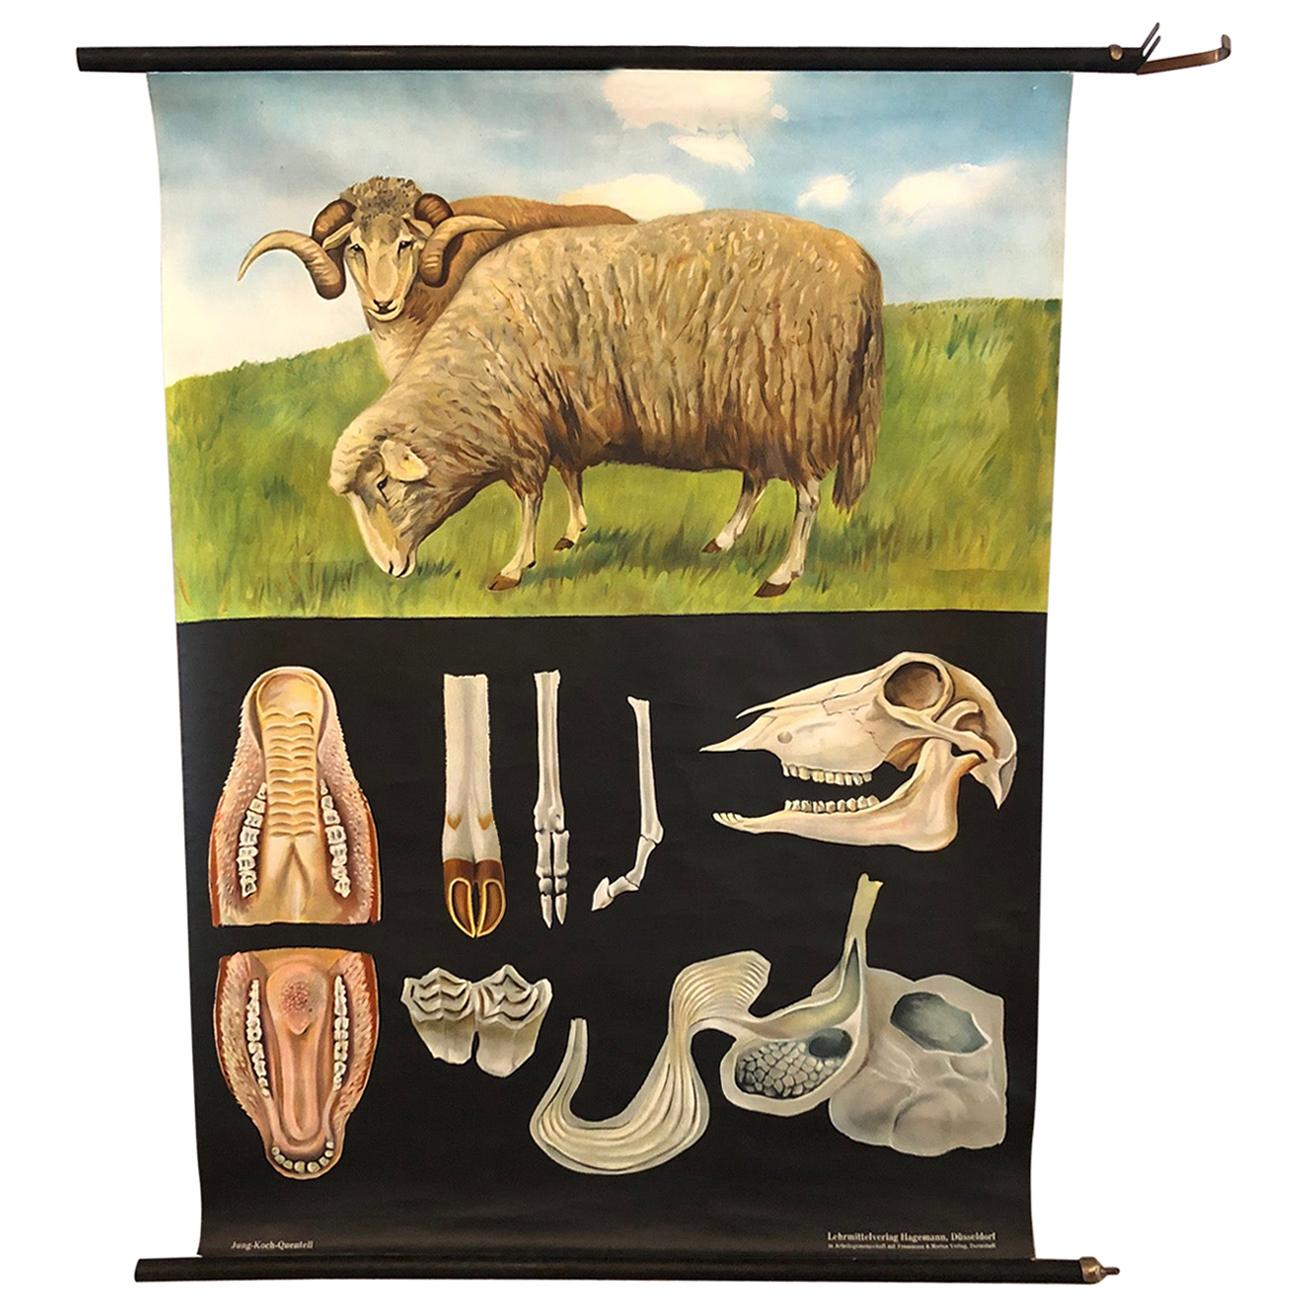 Jung-Koch-Quentell Anatomietafel eines Schafs im Angebot